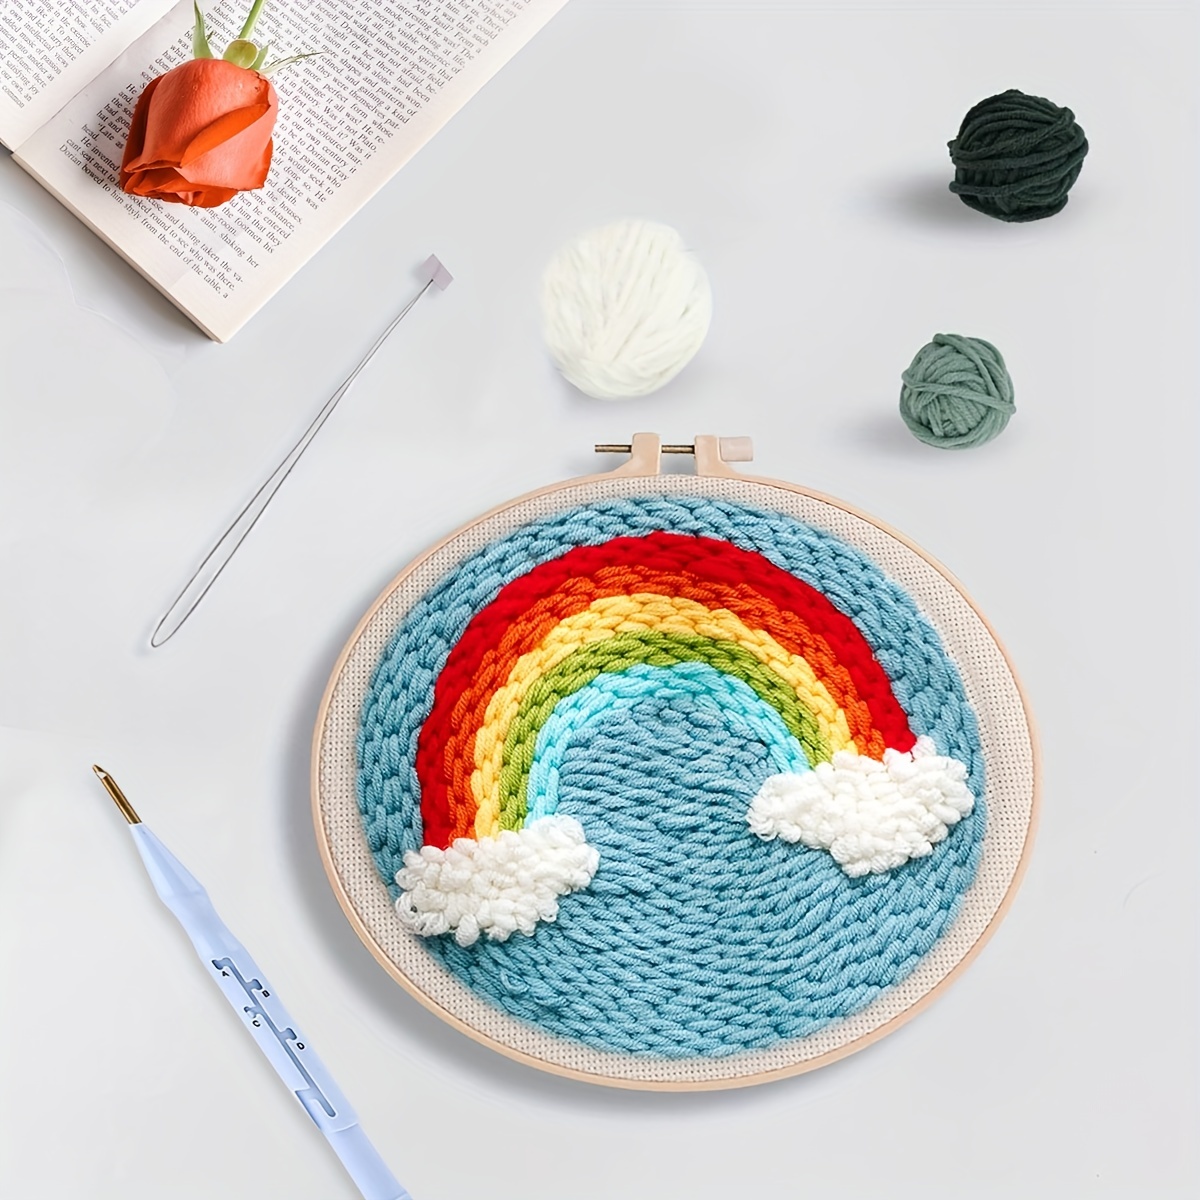 Punch Needle Beginner Kit Supplies Starter Set Rainbow DIY Adult Crafts 